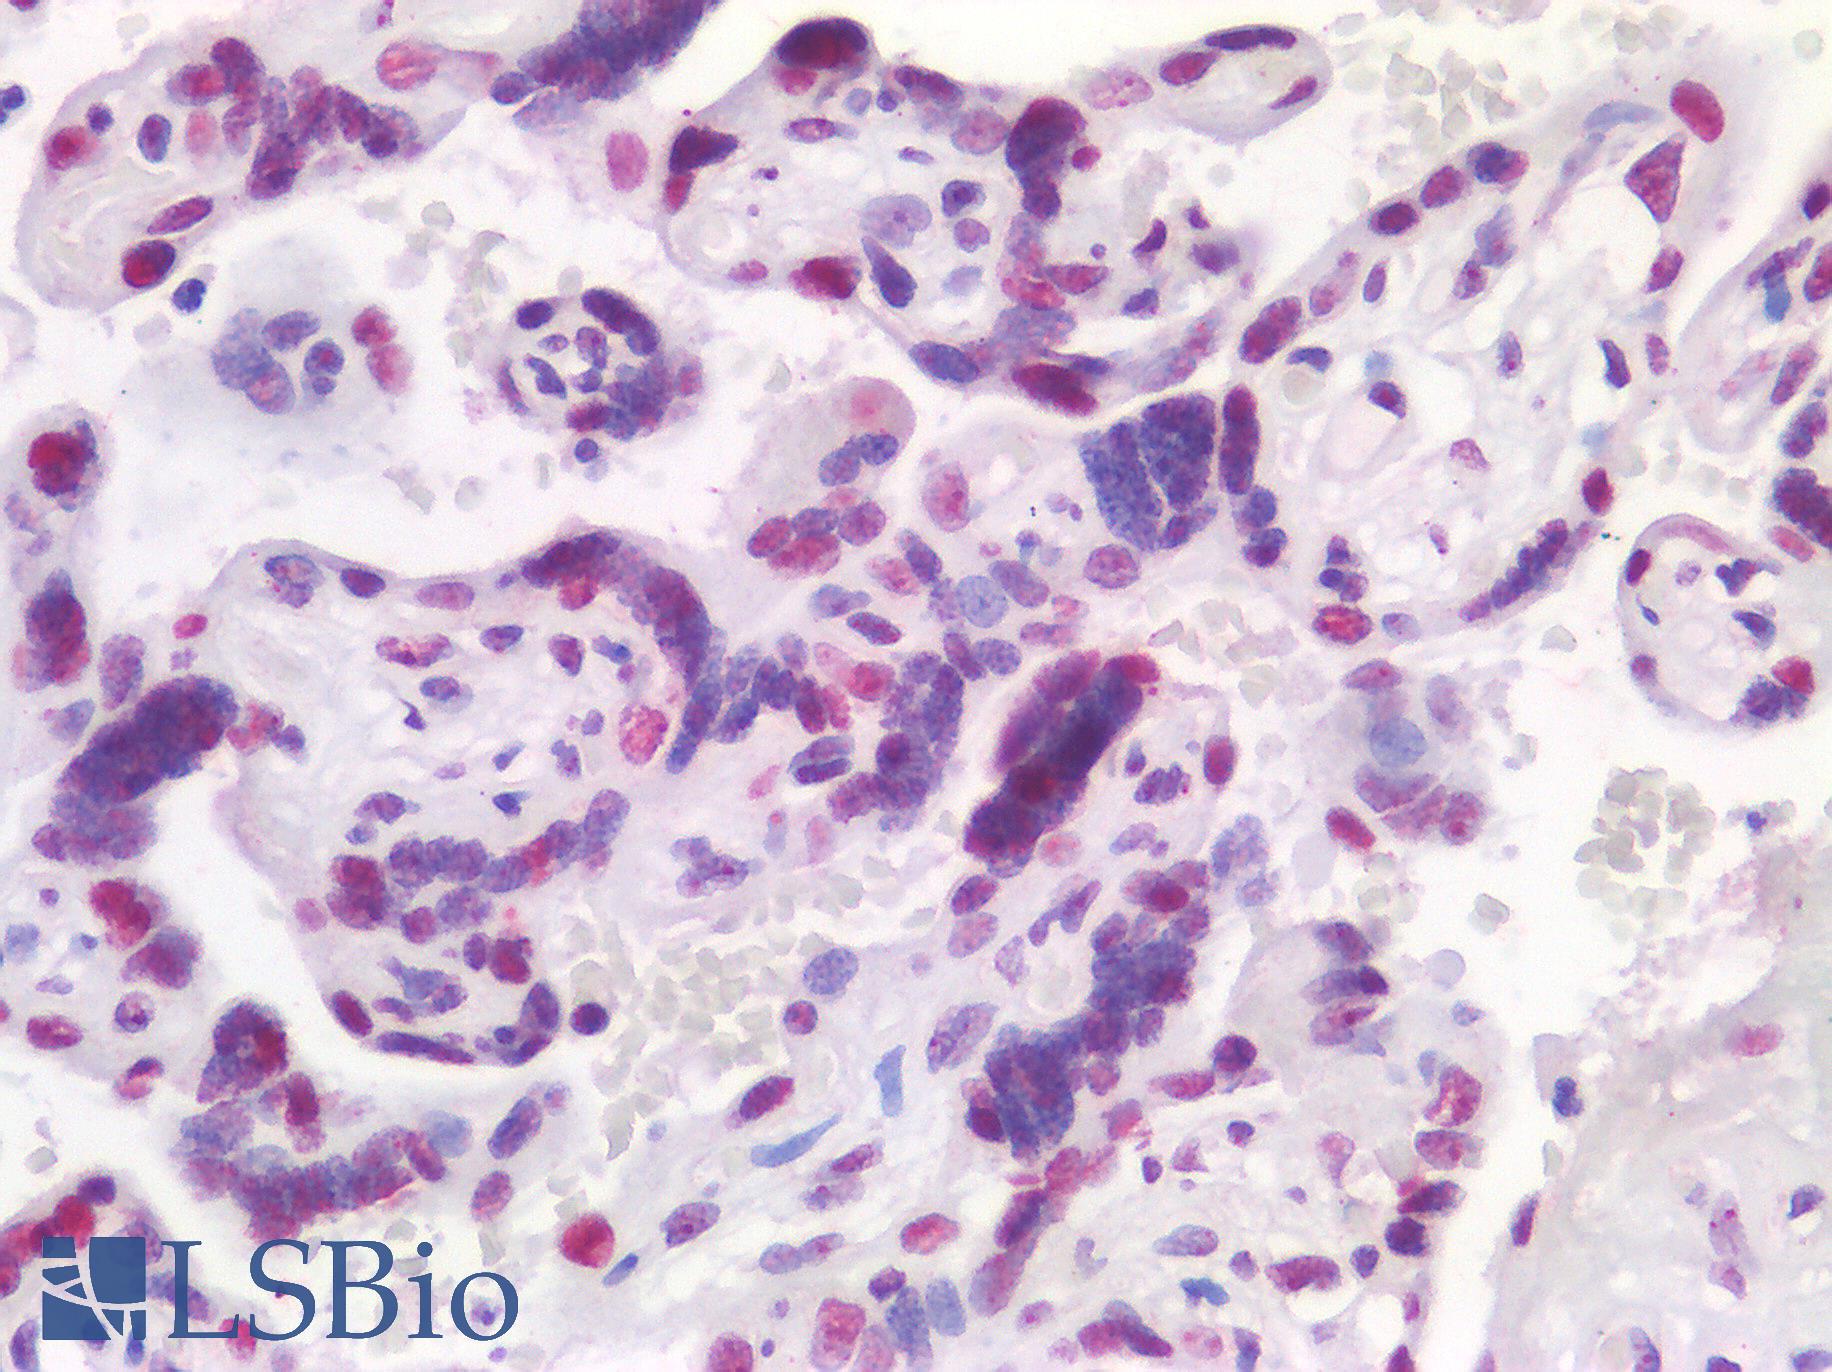 NPM1 / NPM / Nucleophosmin Antibody - Human Placenta: Formalin-Fixed, Paraffin-Embedded (FFPE)